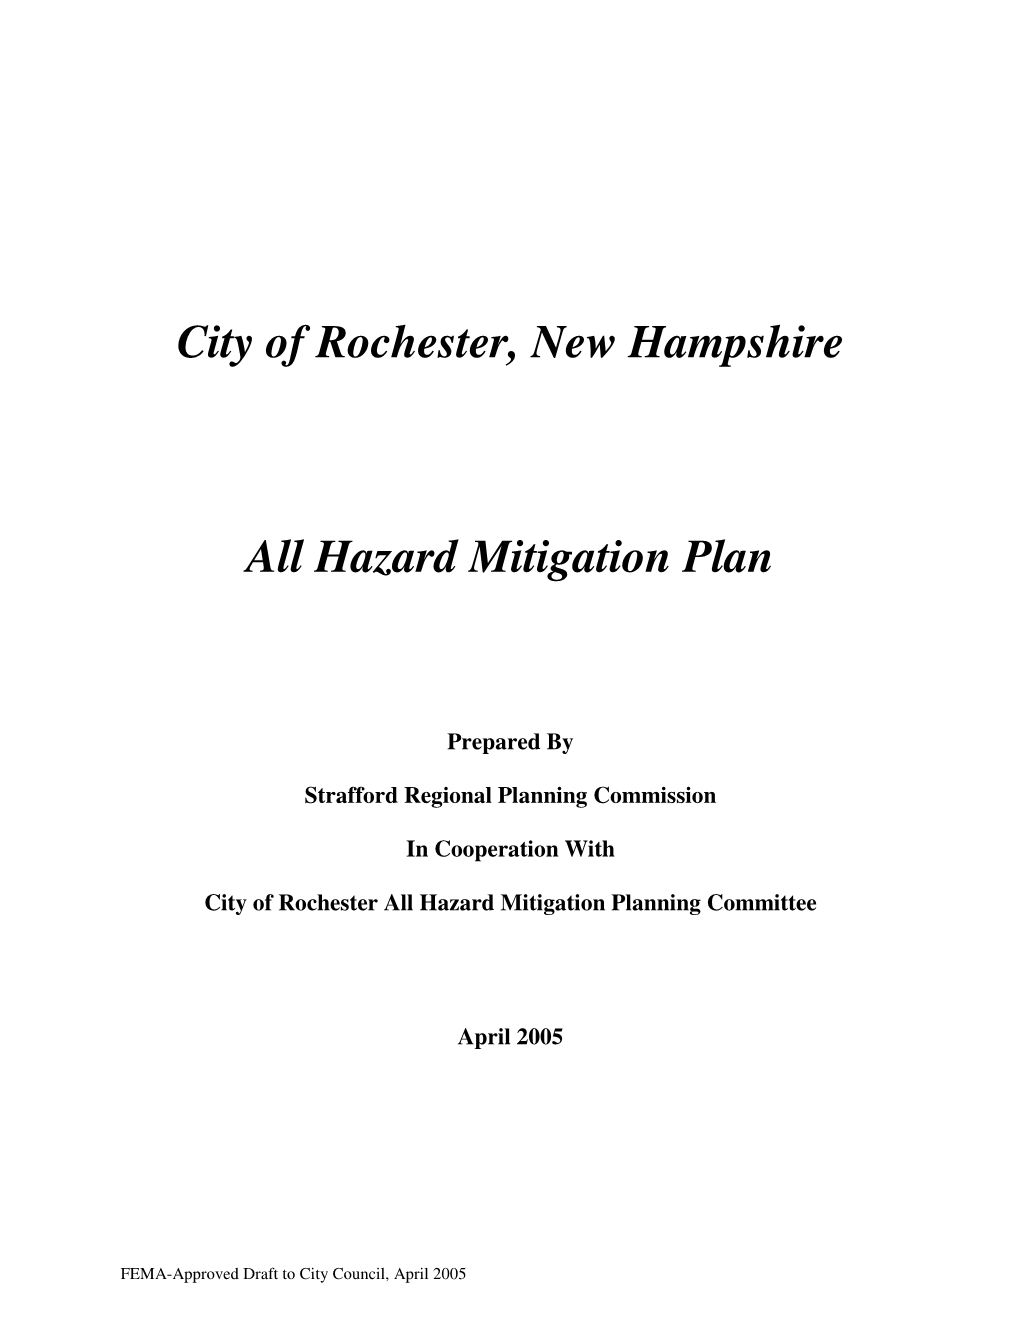 City of Rochester, New Hampshire All Hazard Mitigation Plan